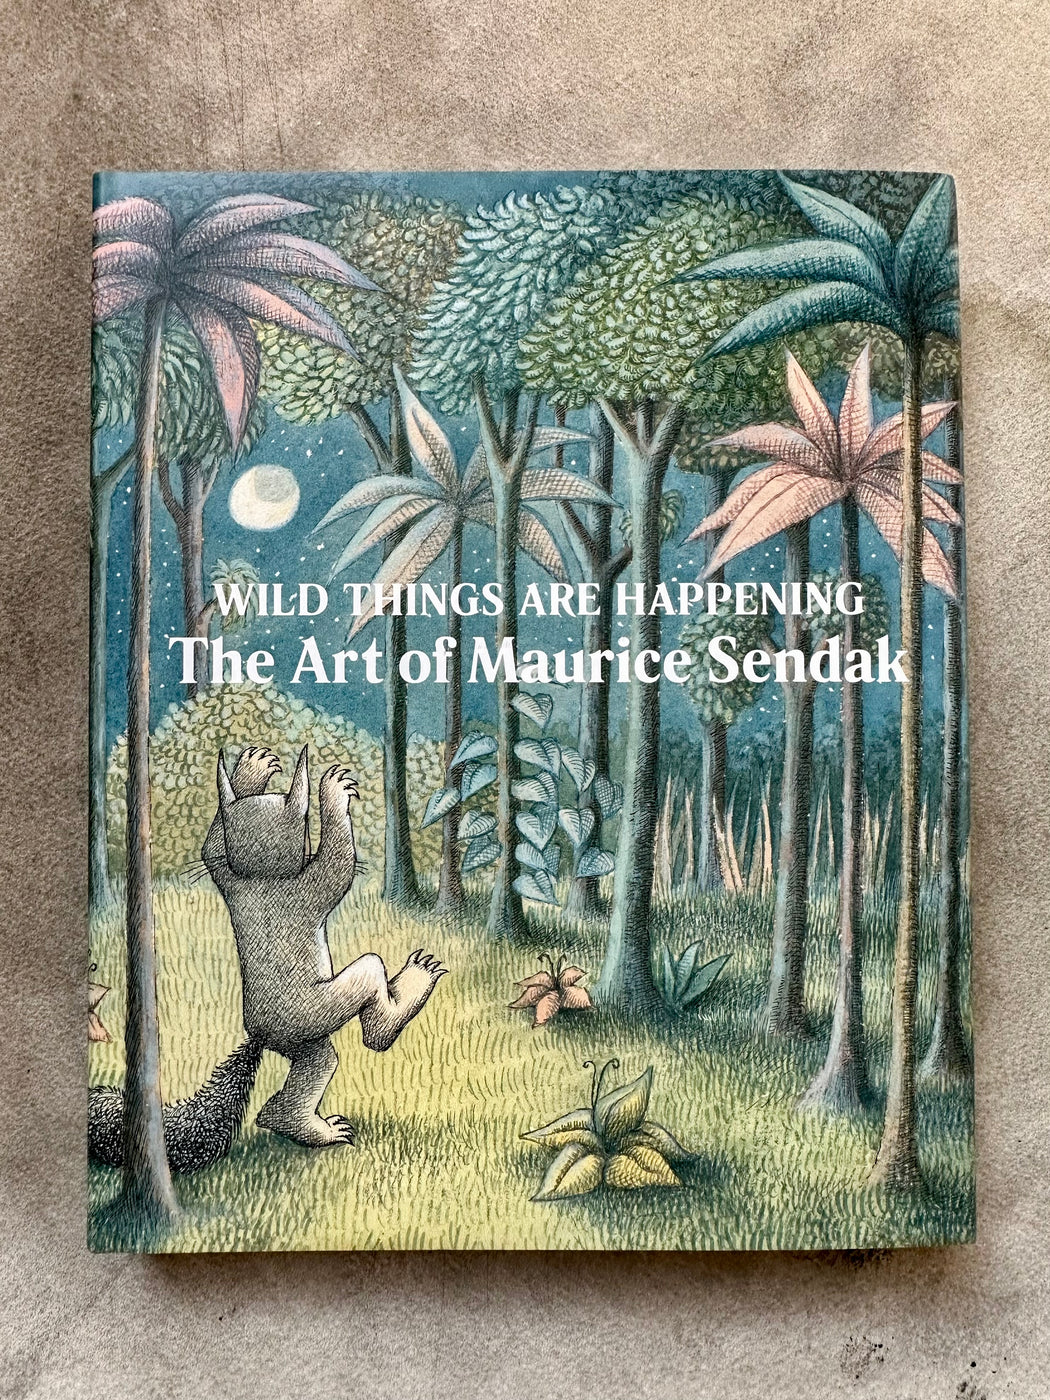 "Wild Things are Happening: The Art of Maurice Sendak"